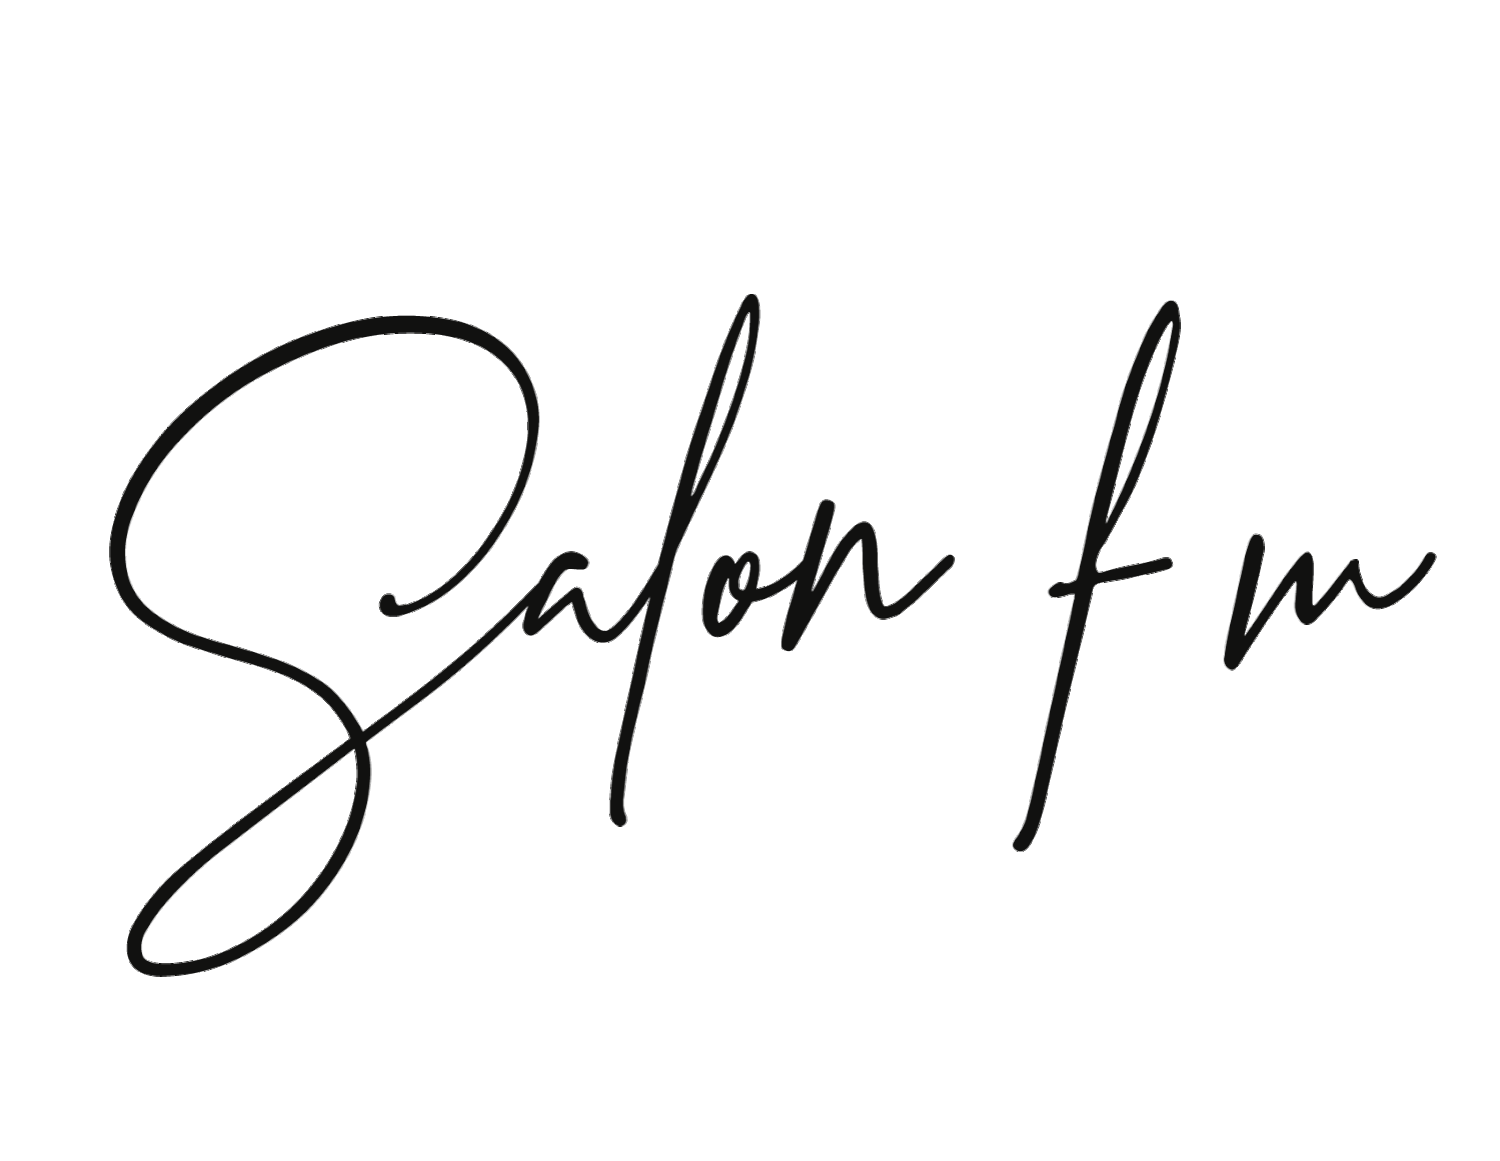 Salon FM